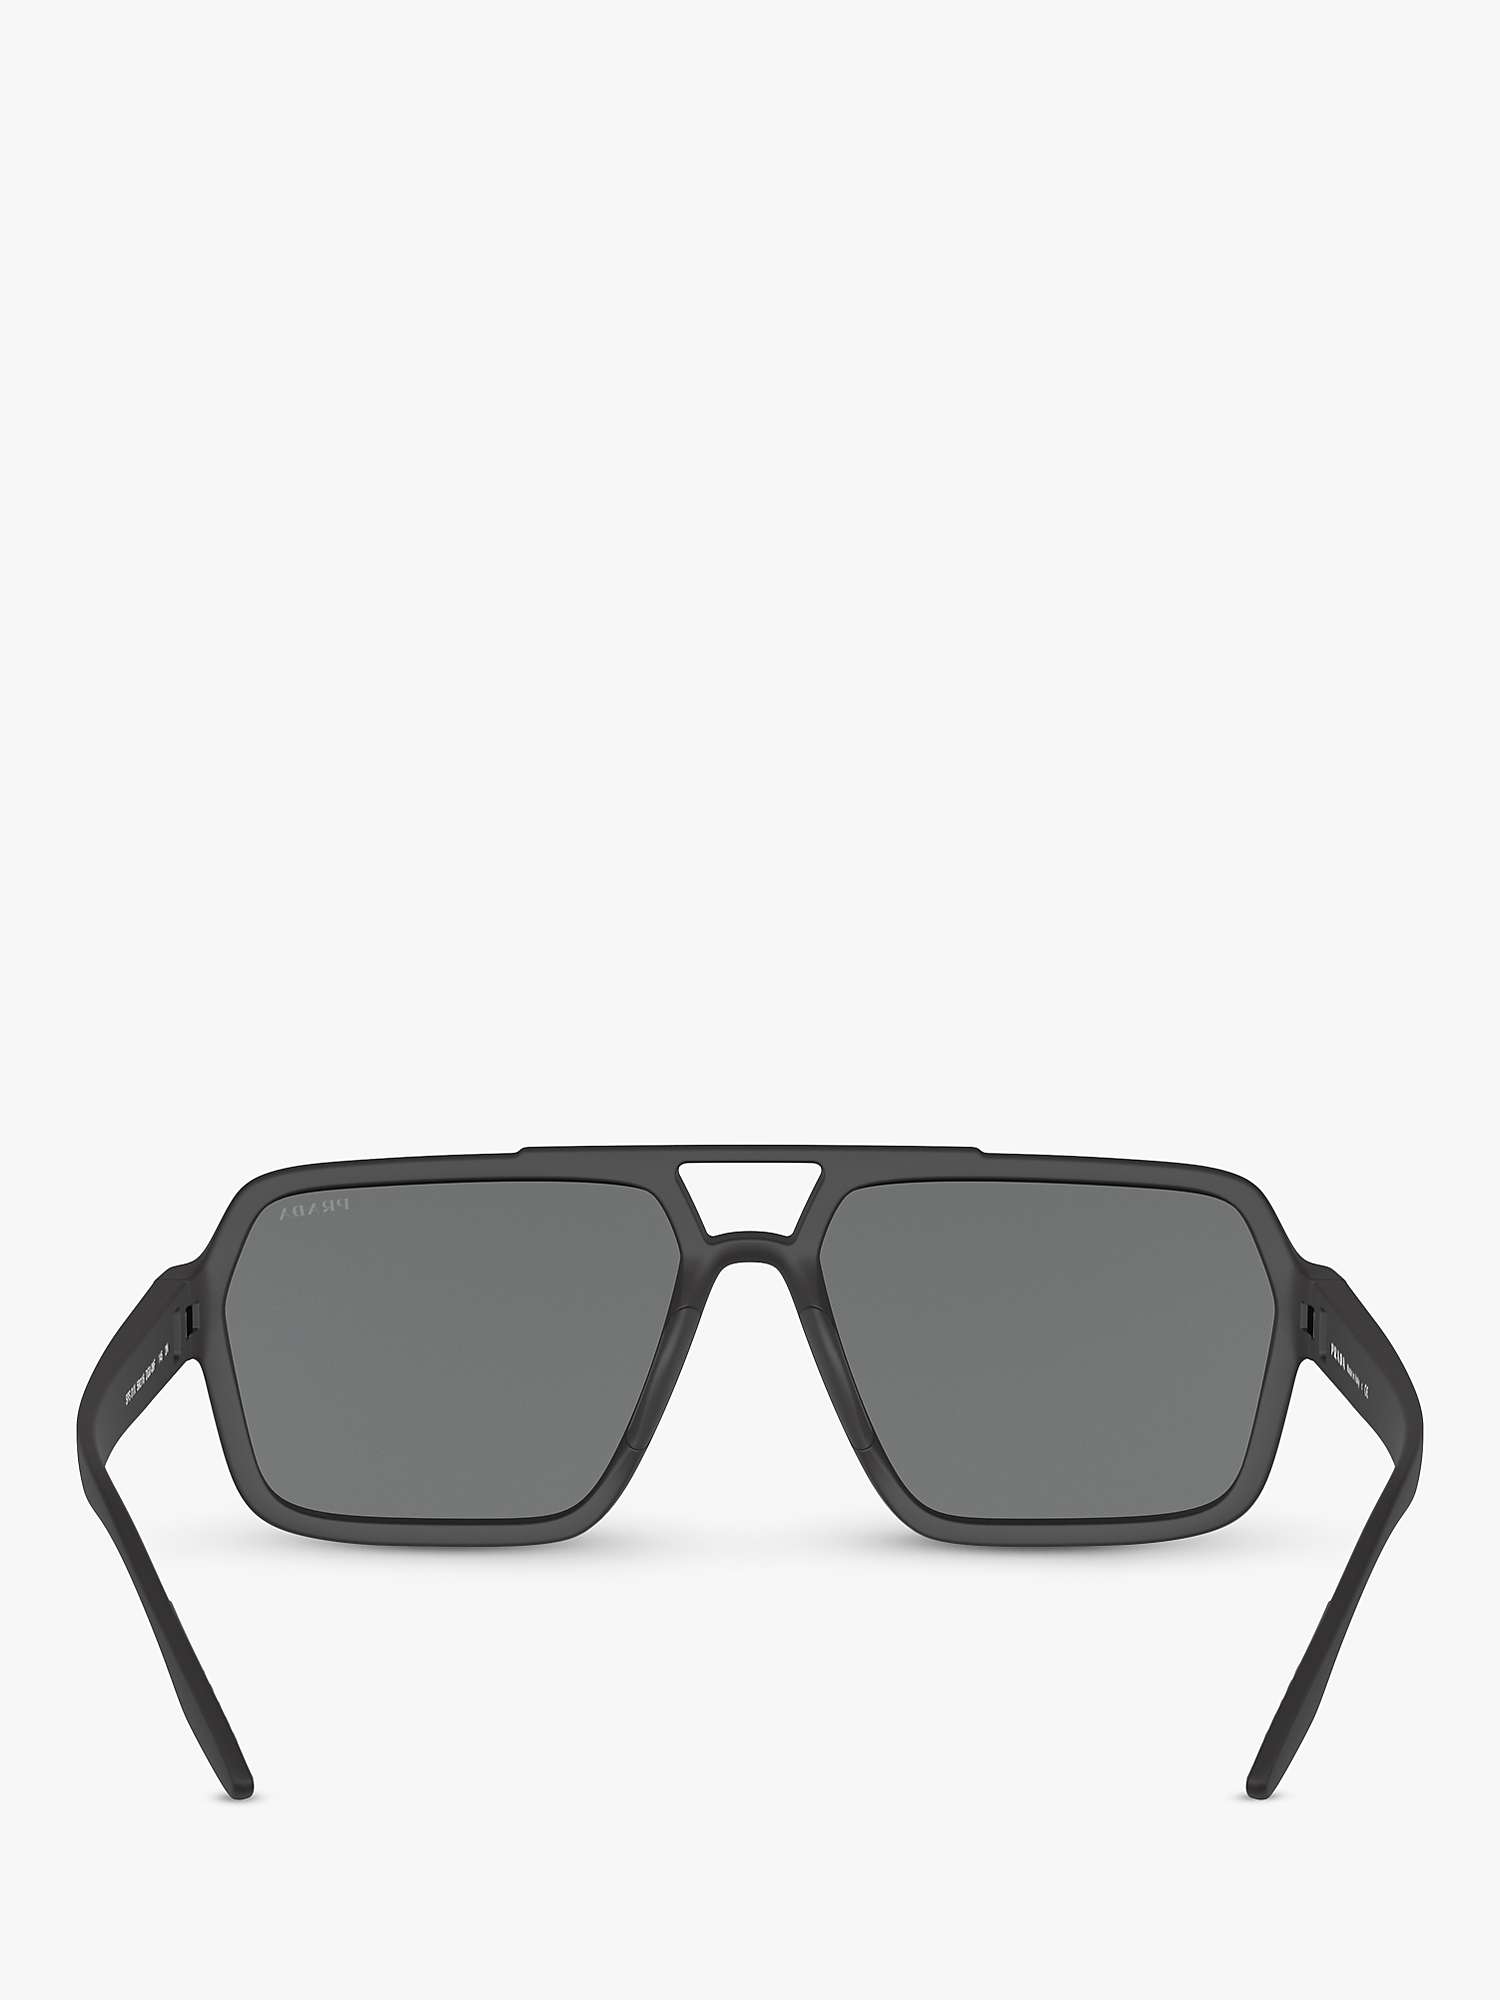 Buy Prada PS 01XS Men's Rectangular Sunglasses, Black/Mirror Grey Pink Online at johnlewis.com